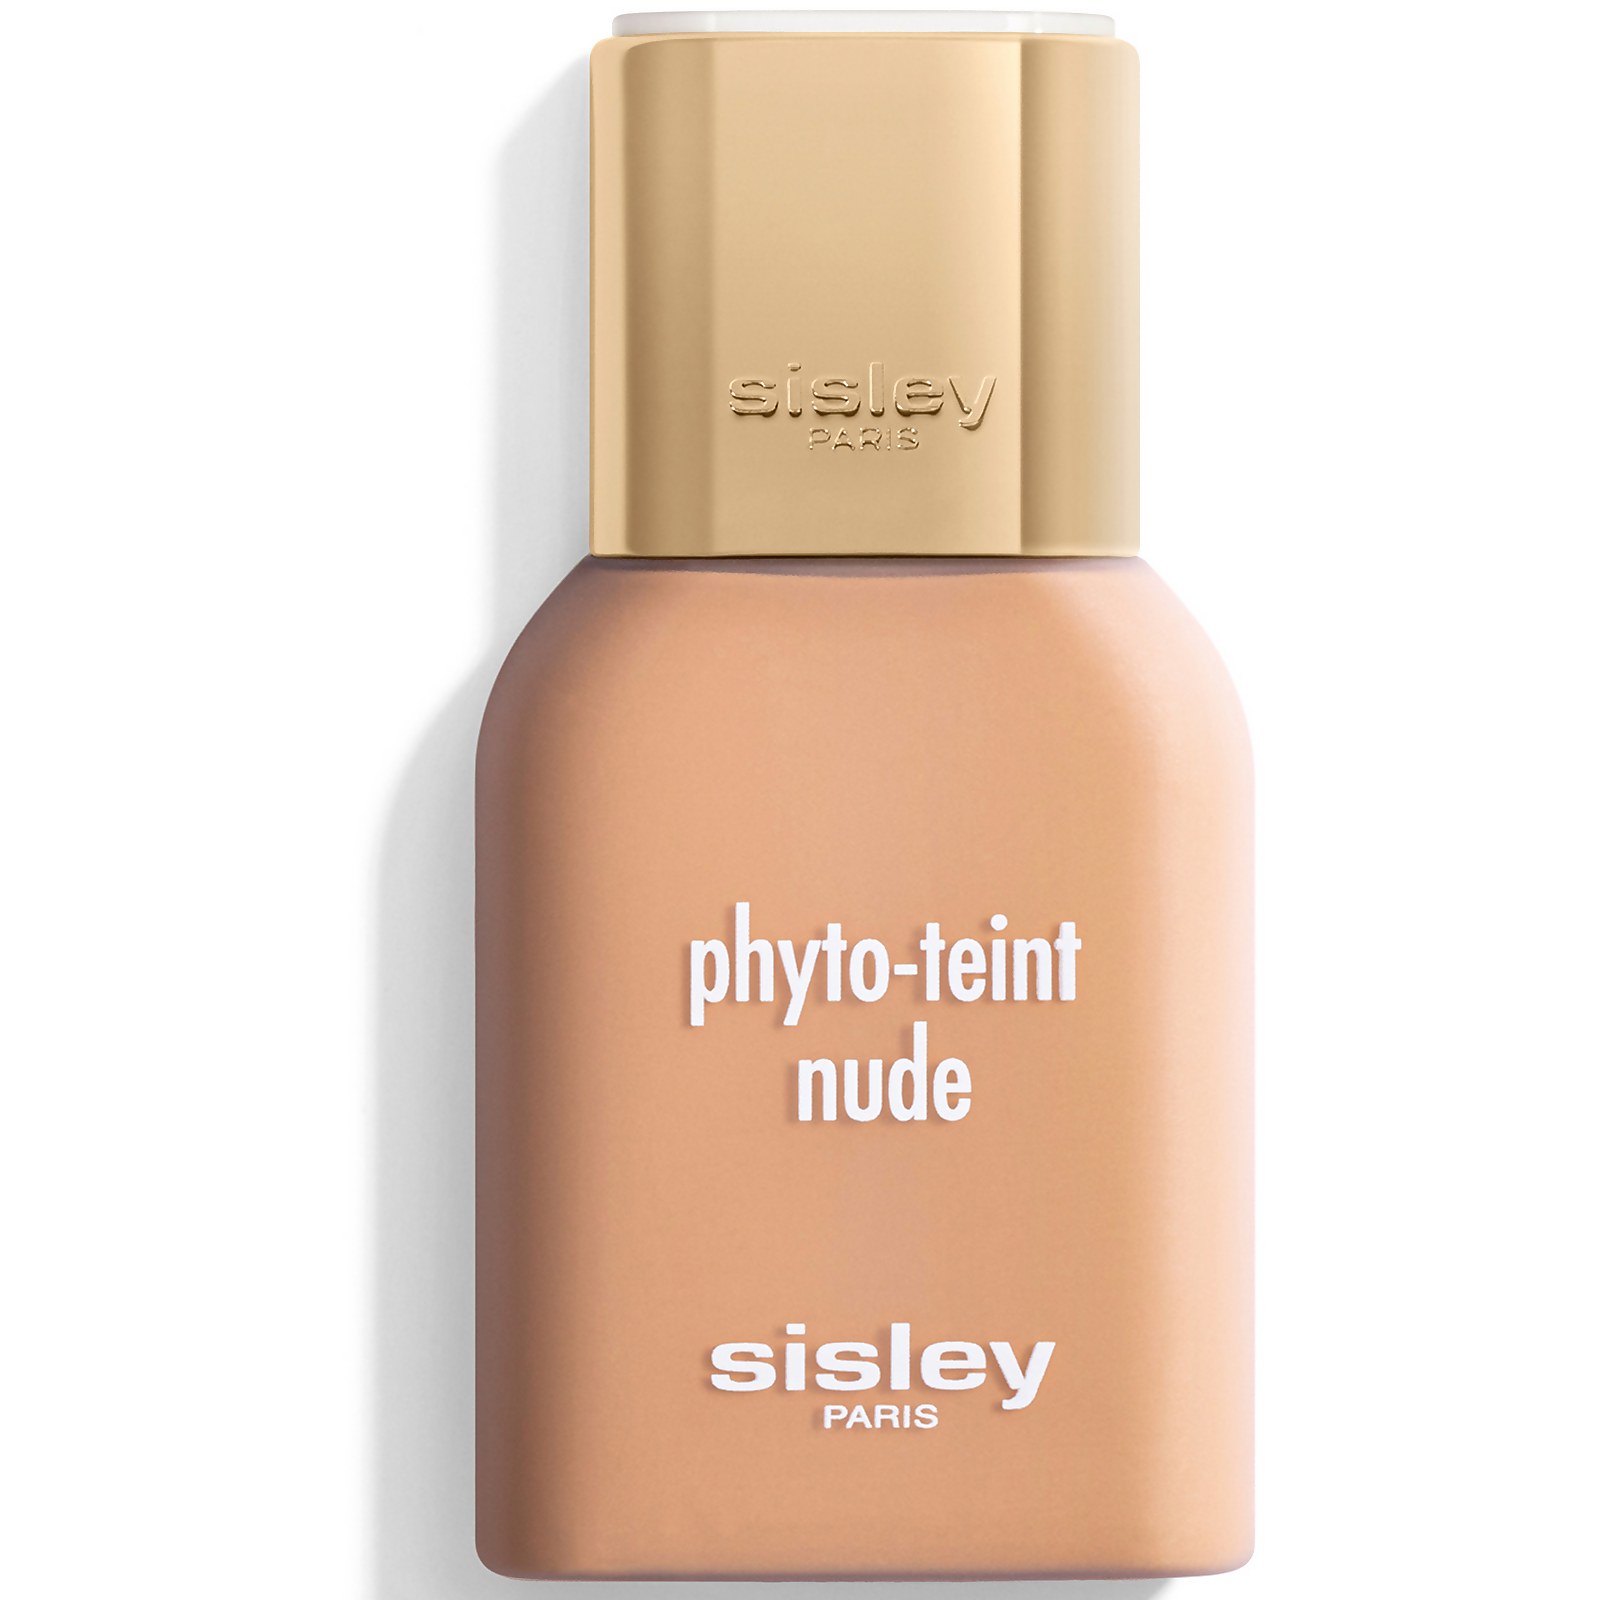 Photos - Foundation & Concealer Sisley PARIS Phyto-Teint Nude Foundation 30ml  - Warm Almo (Various Shades)